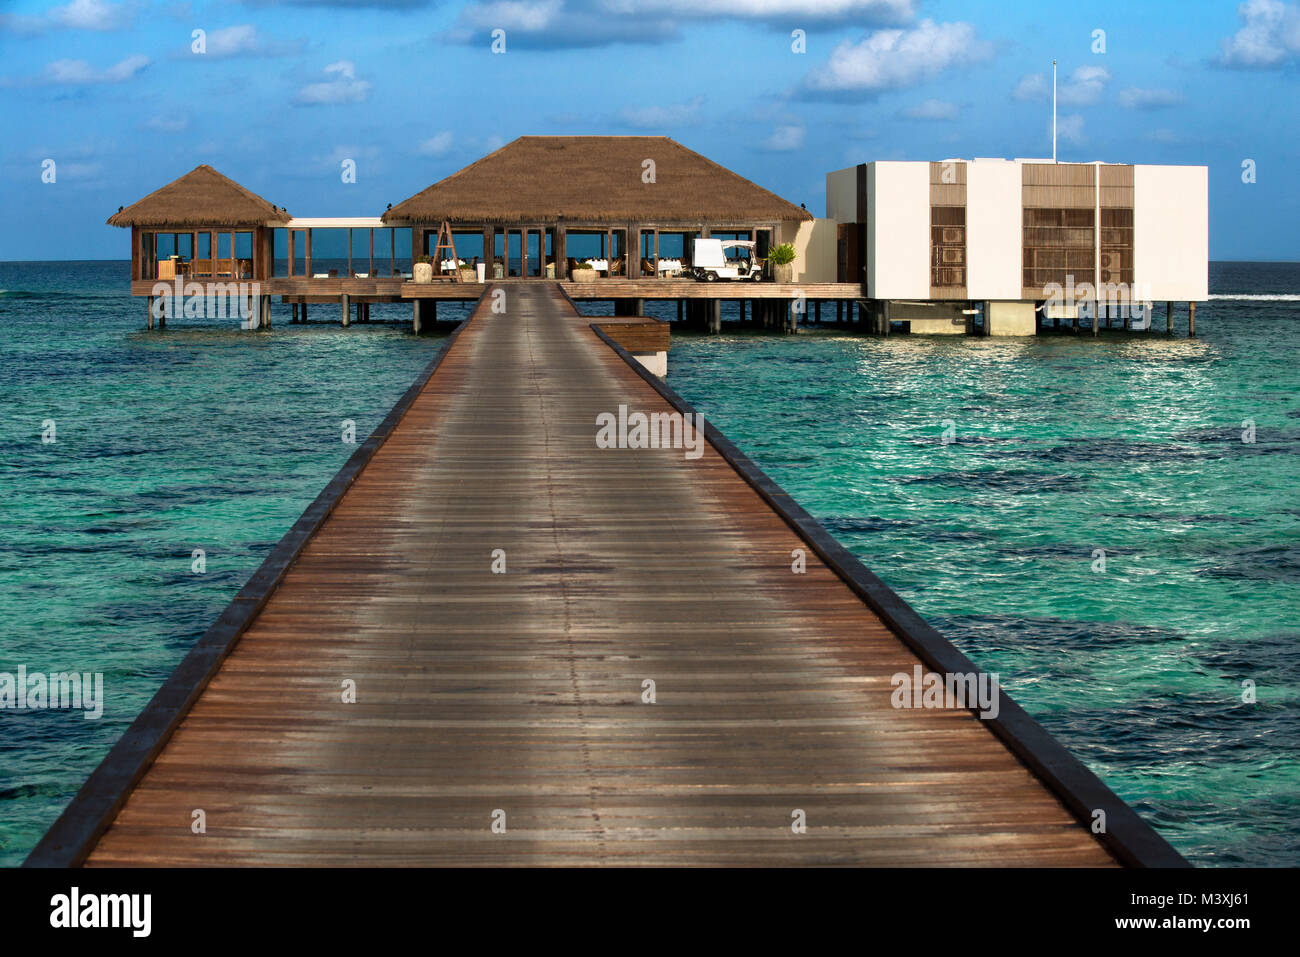 The Residence Hotel and Resort restaurant, Gaafu Alifu Atoll. Maldives Islands. Stock Photo